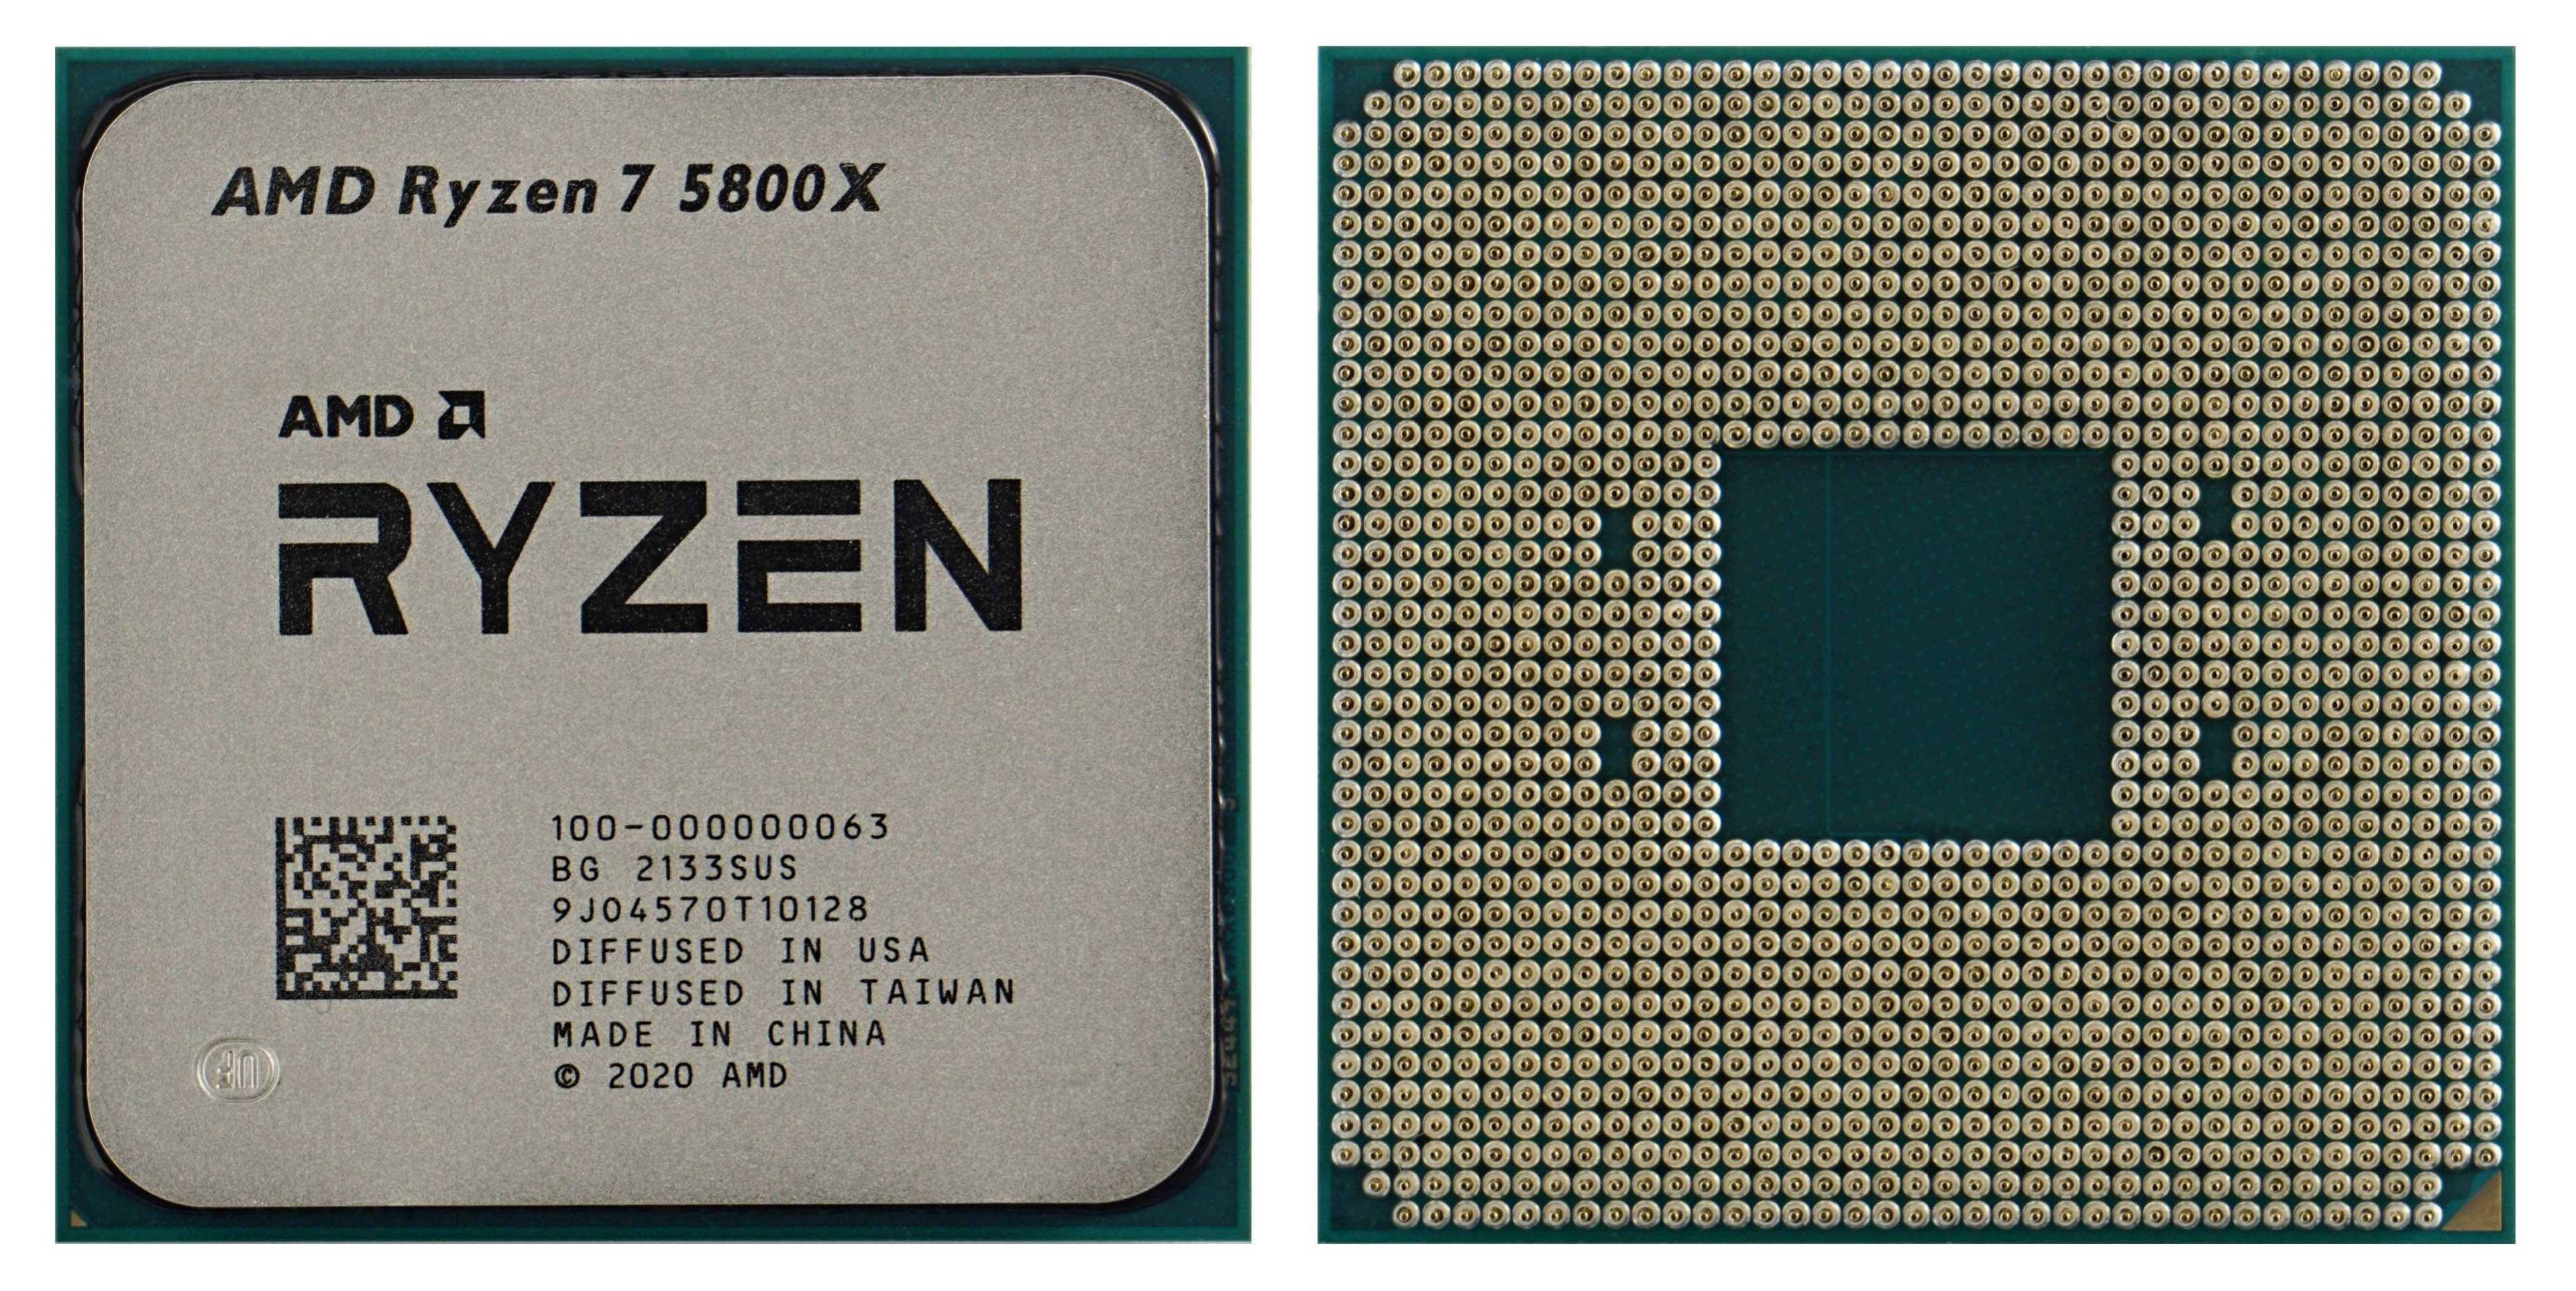 Enhance your pleasure with AMD Ryzen 7 5800X